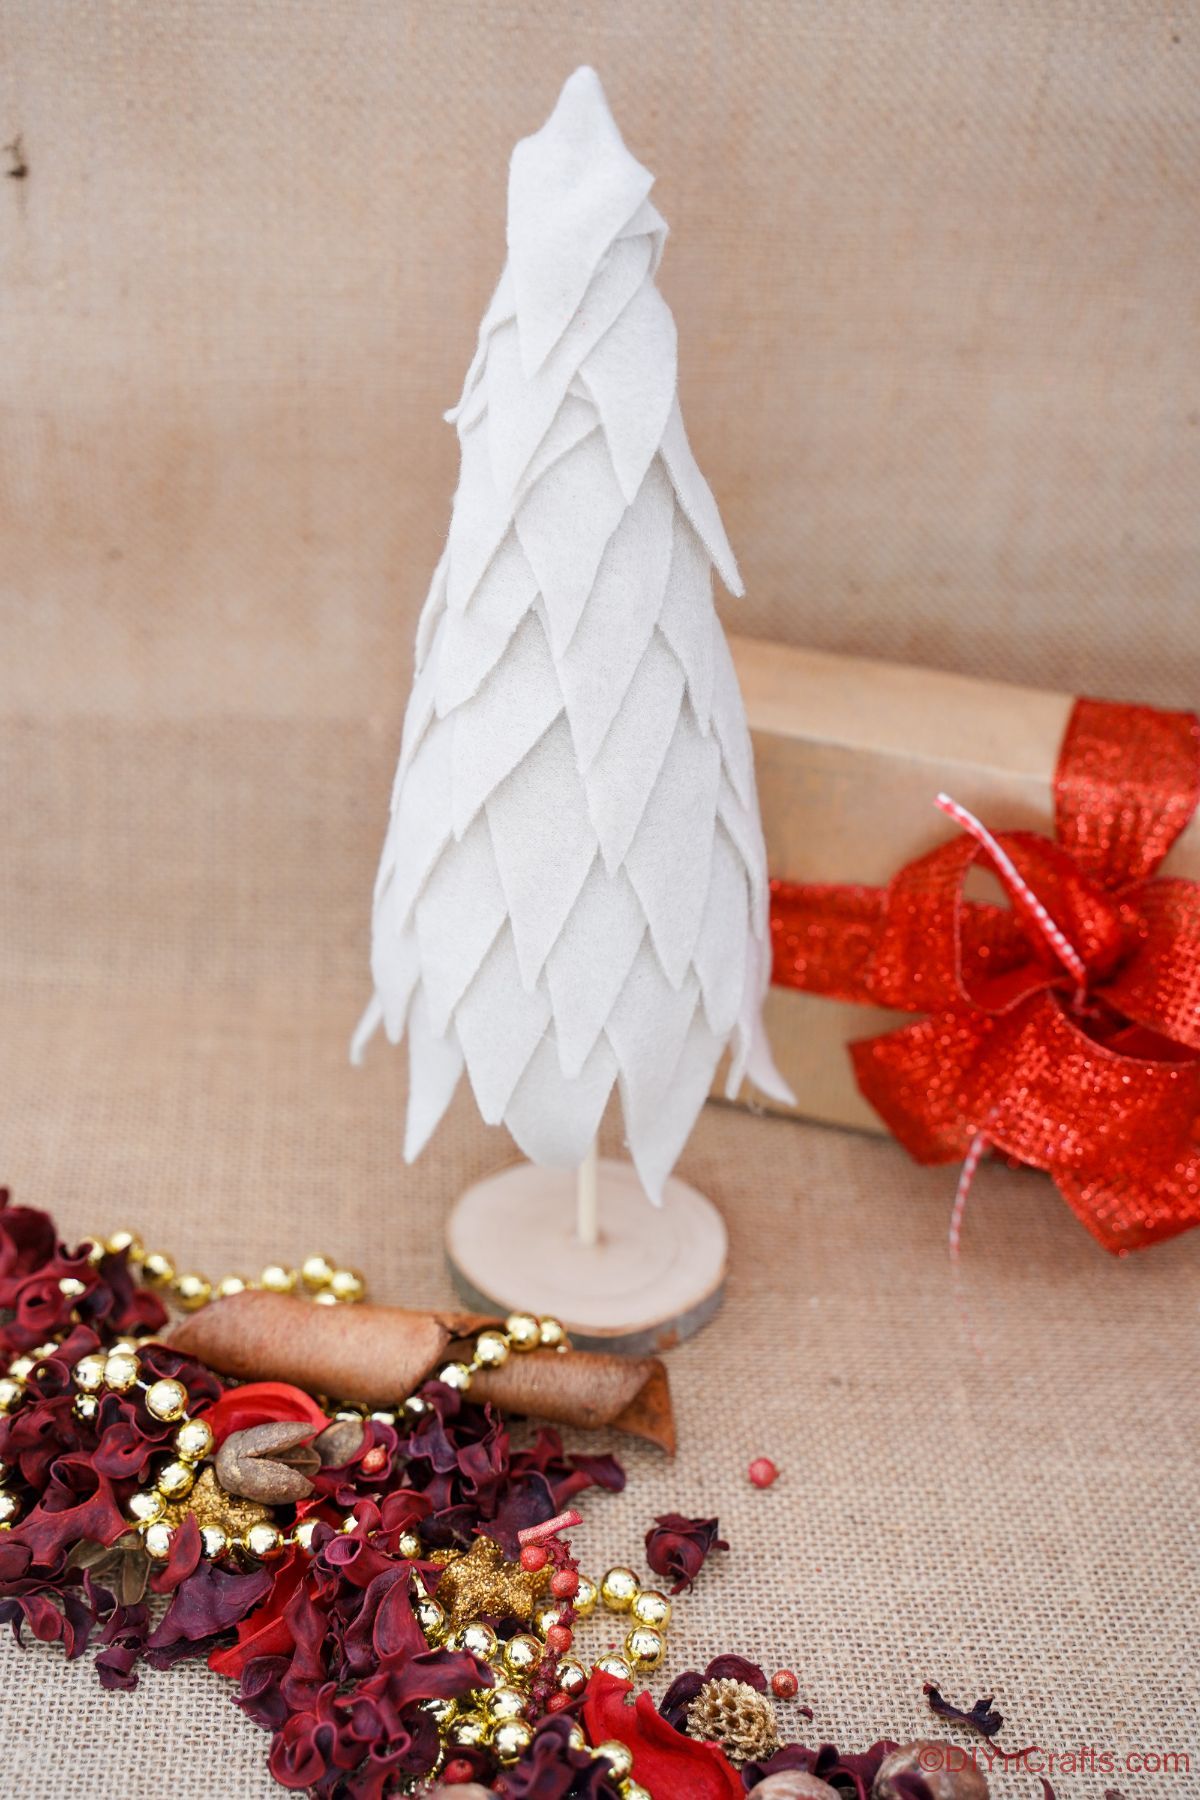 cream fabric christmas tree on wood table with holiday decor